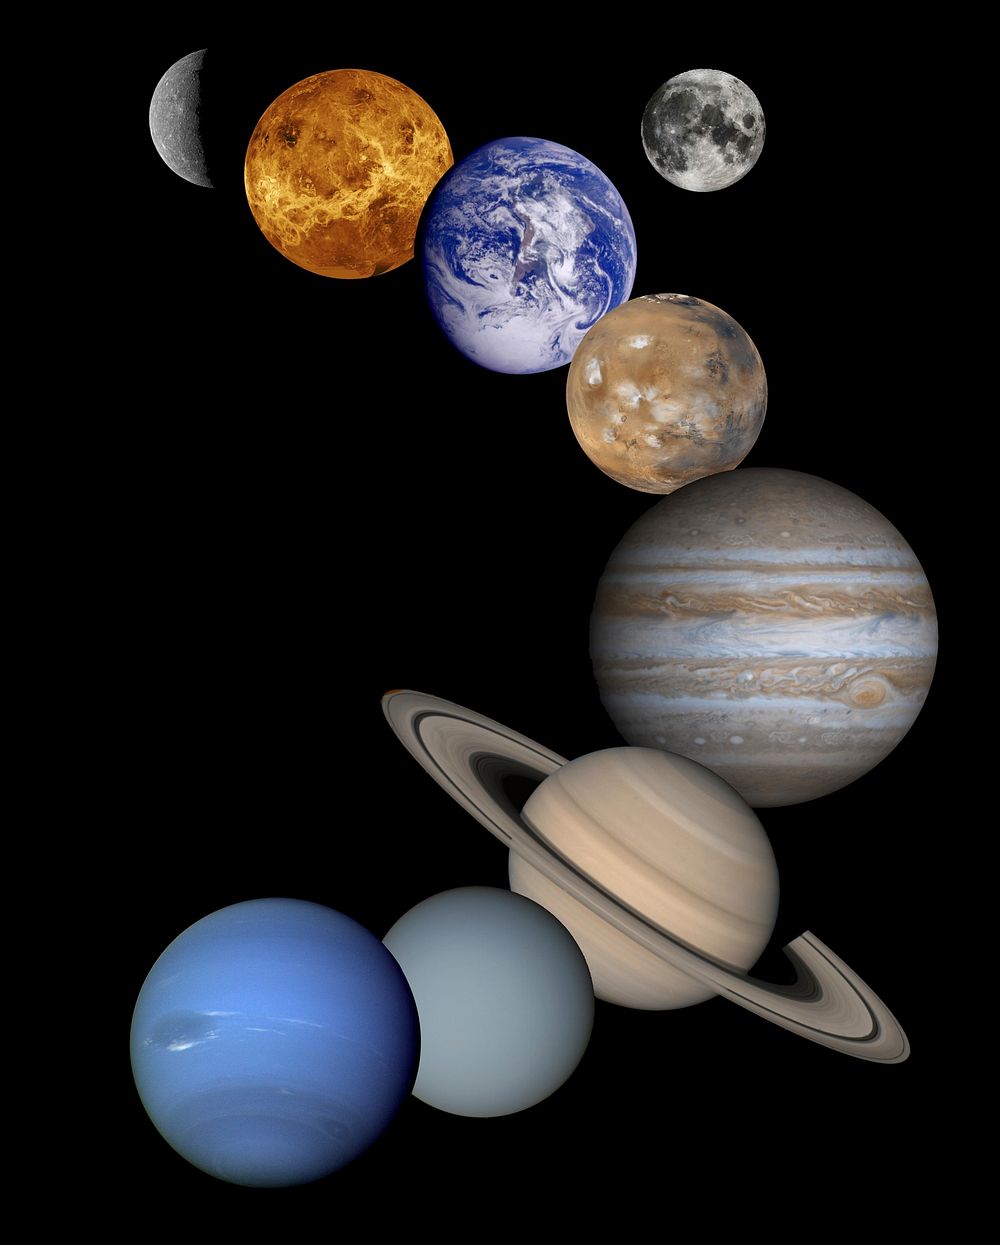 Free solar system, black background image, public domain space CC0 photo.